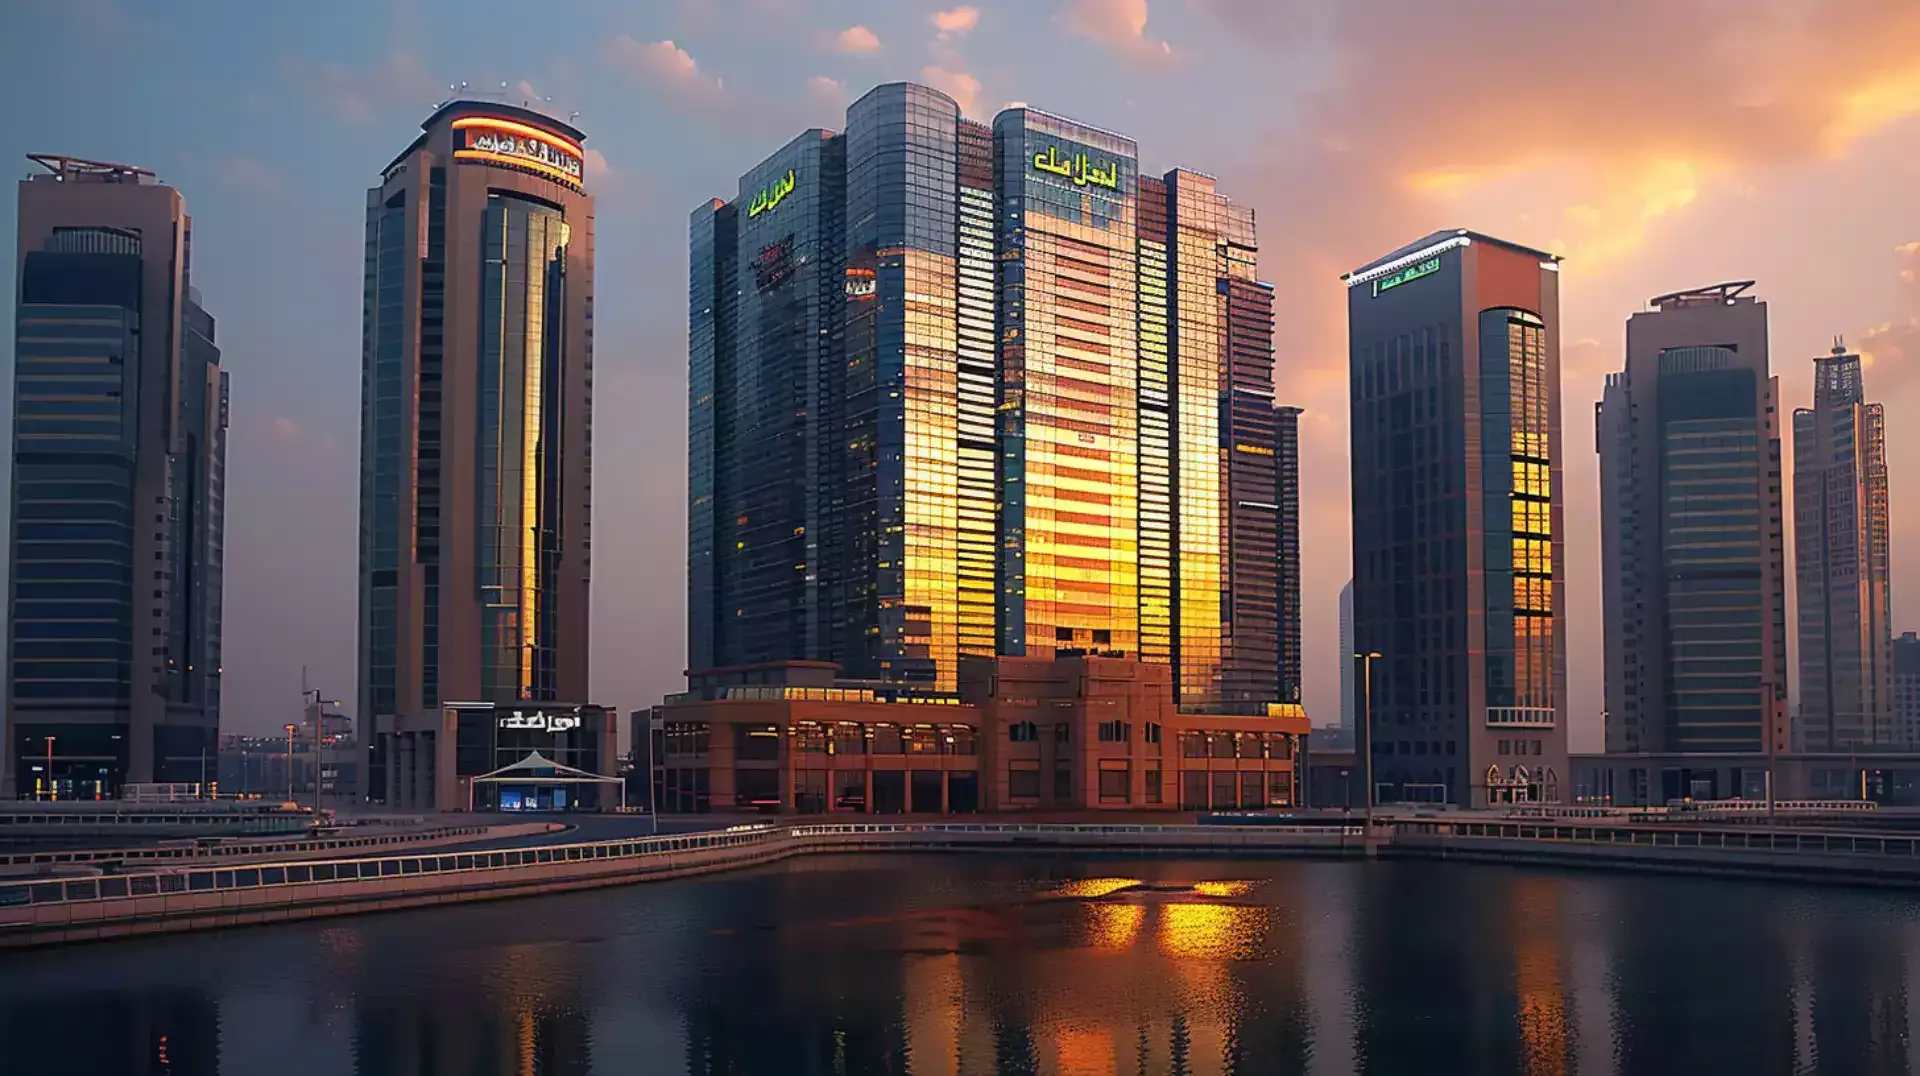 Illustration showcasing the integral role of corporate banking in Dubai's economic landscape